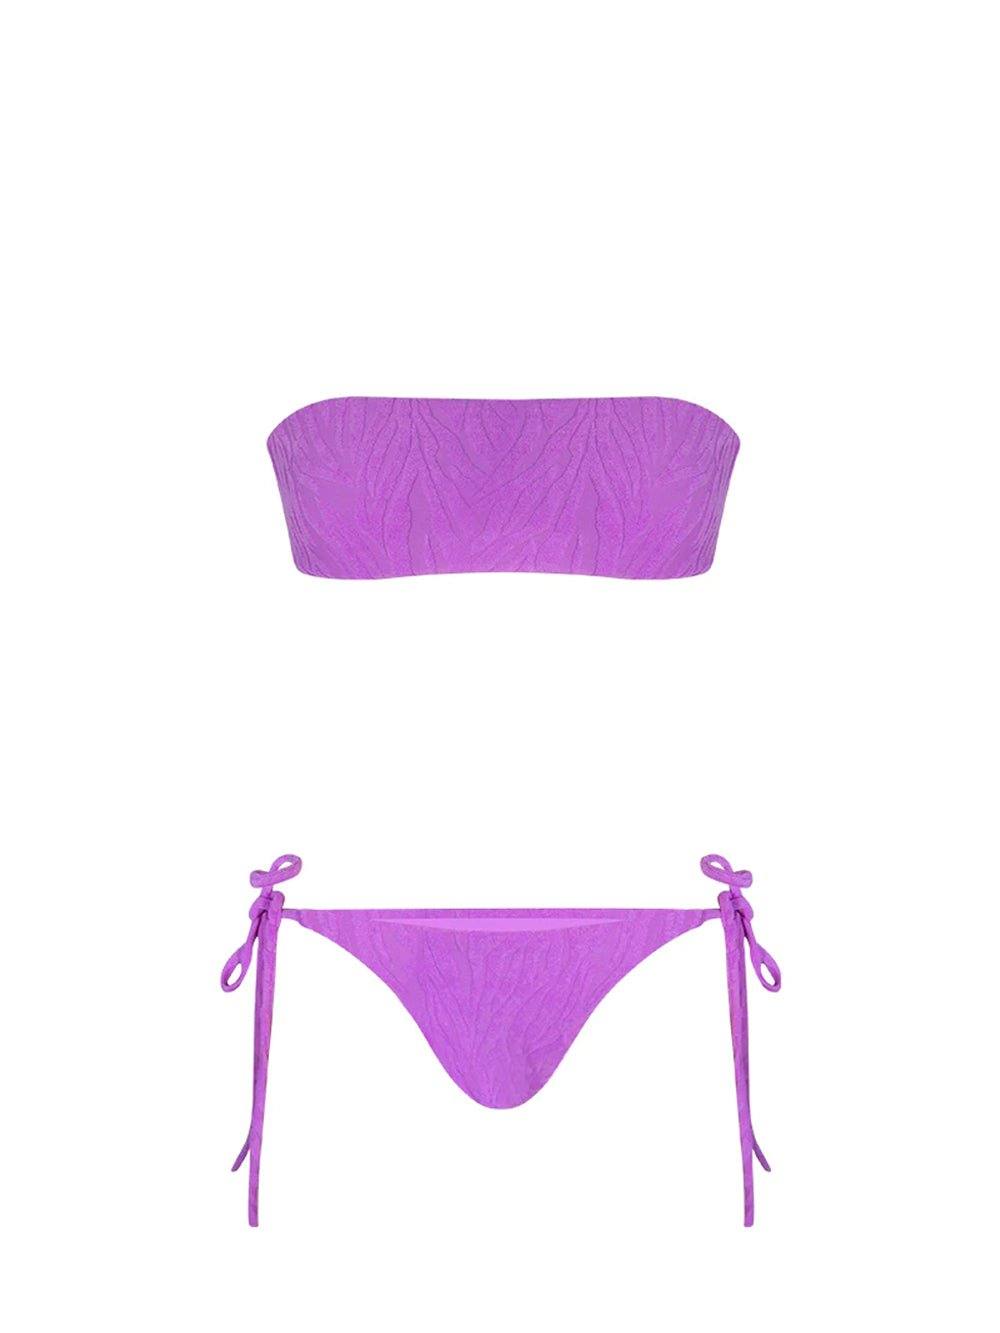 Strapless Bikini - Purple - OCEAN MYSTERY